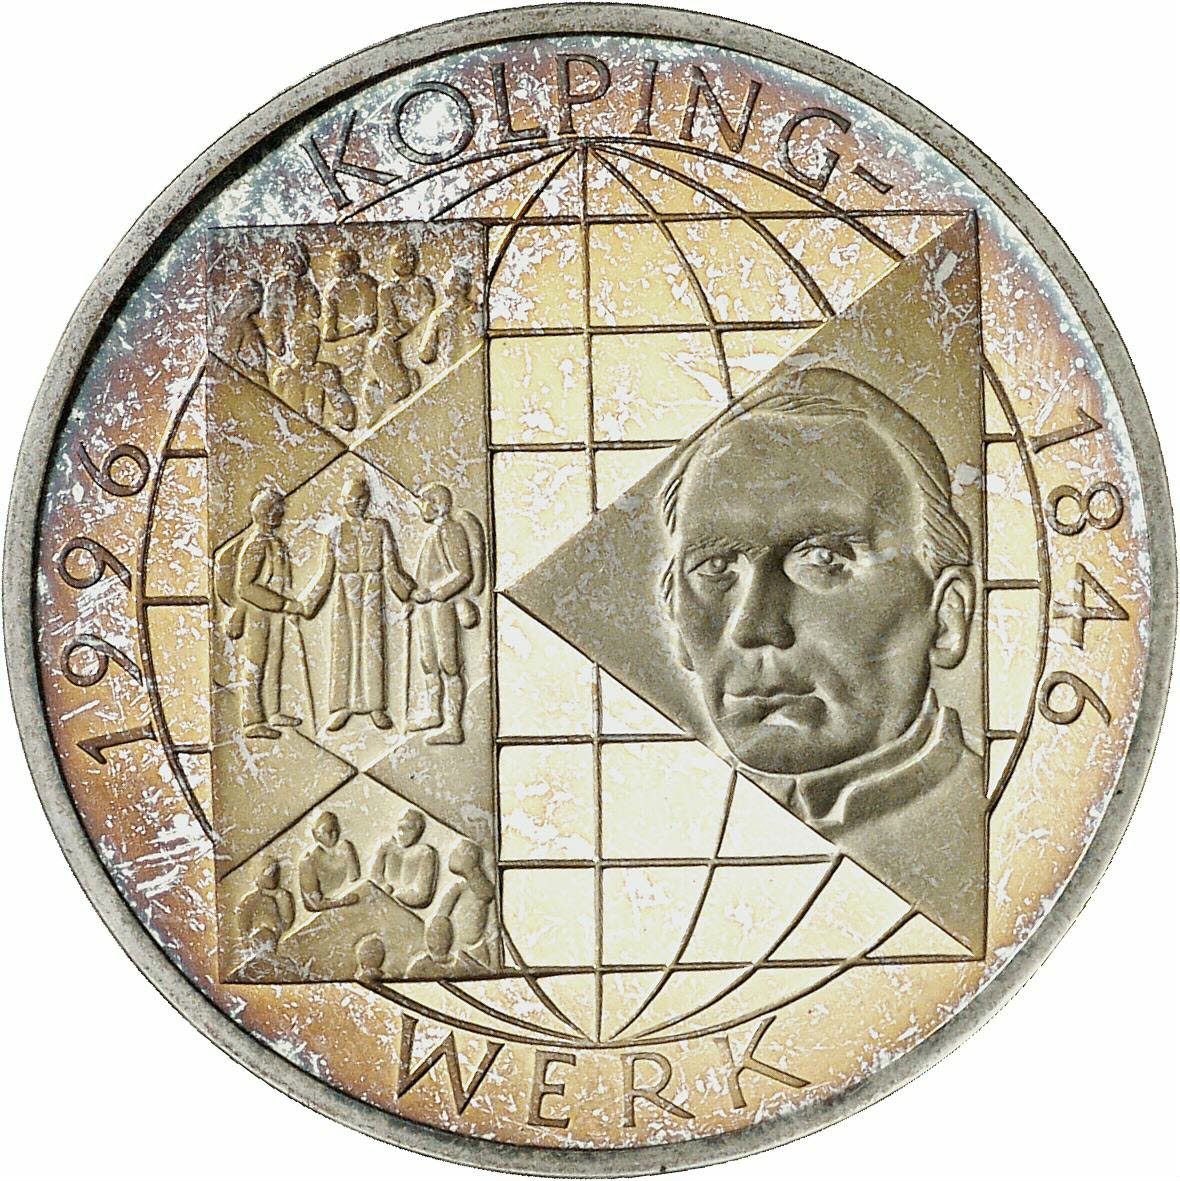 DE 10 Deutsche Mark 1996 A